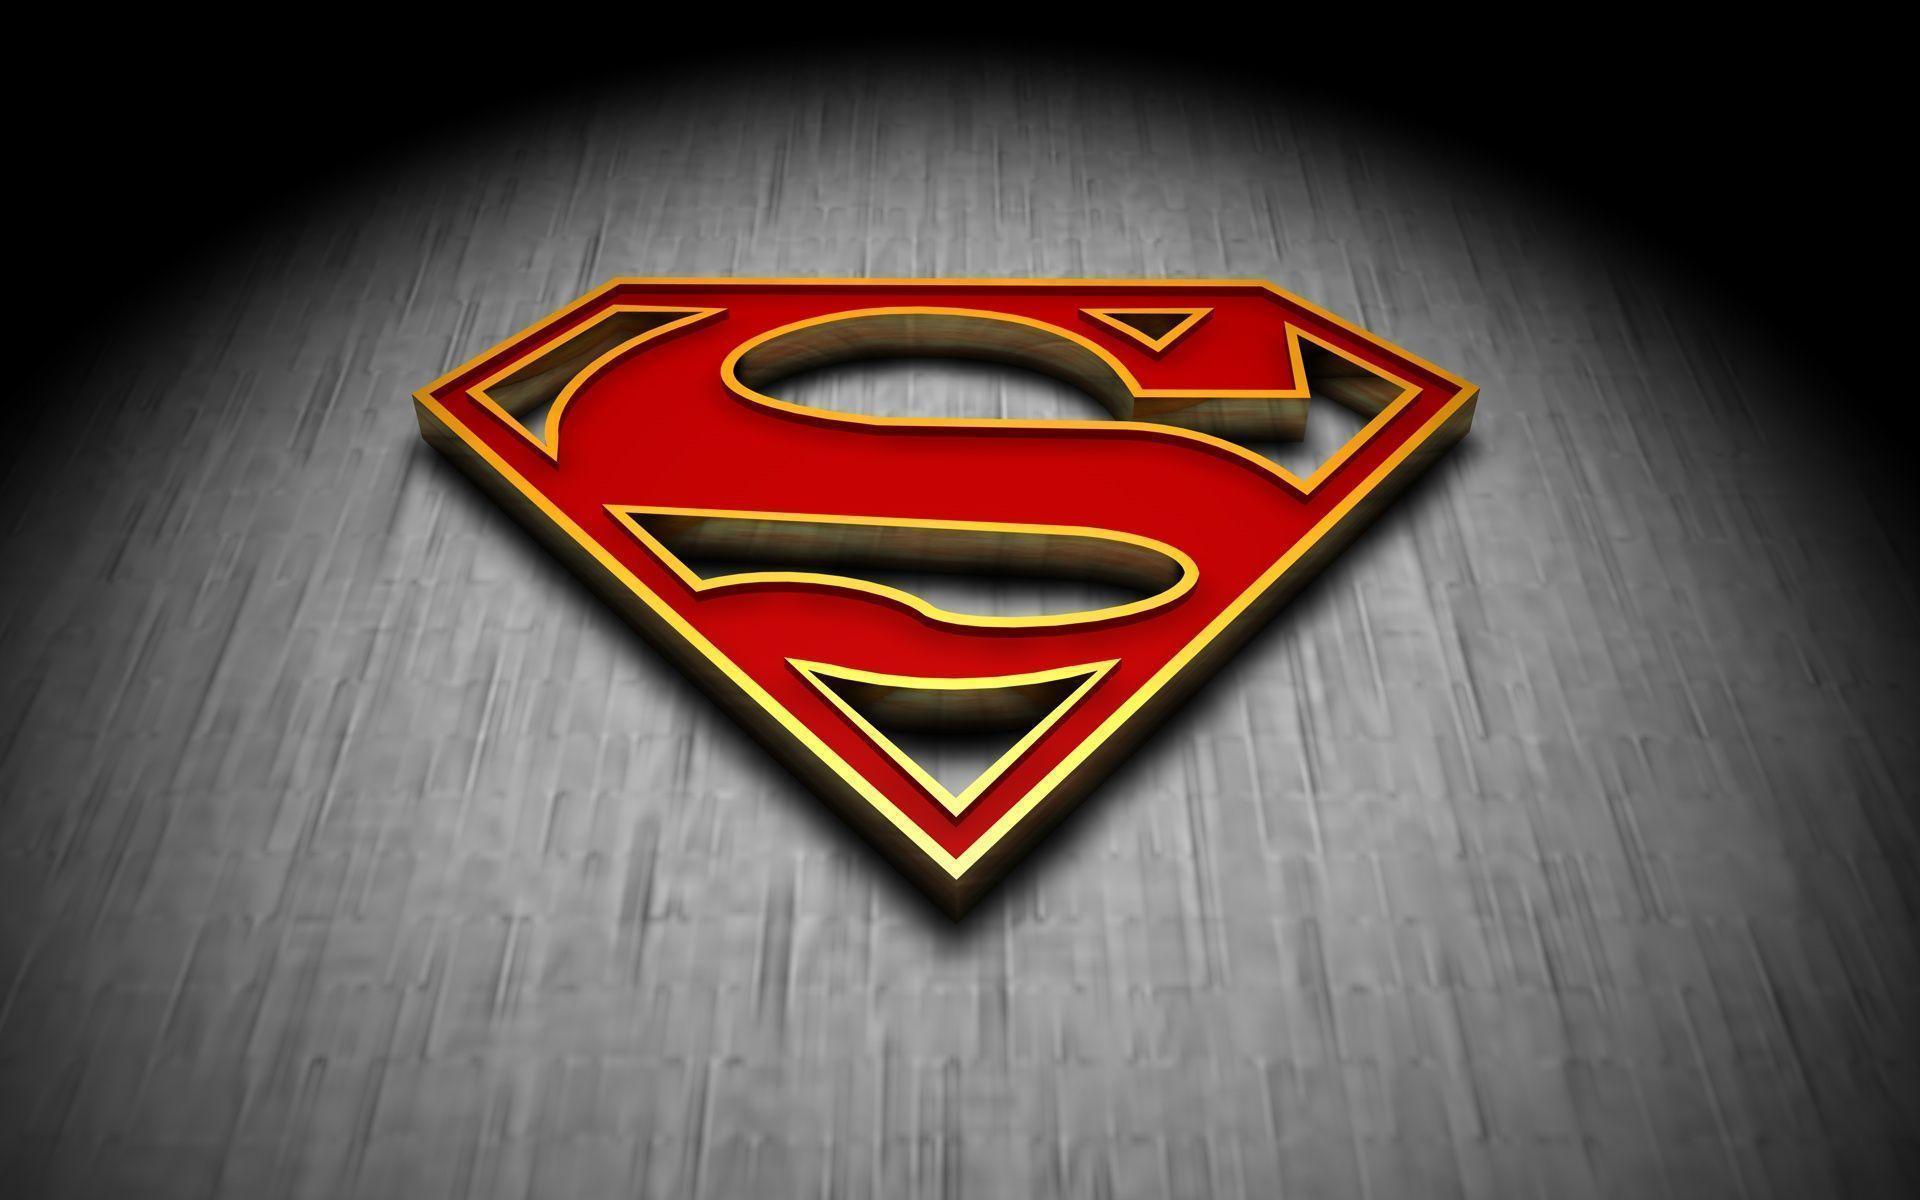 superman logo wallpaper 1080p 9833 - Image And Wallpaper